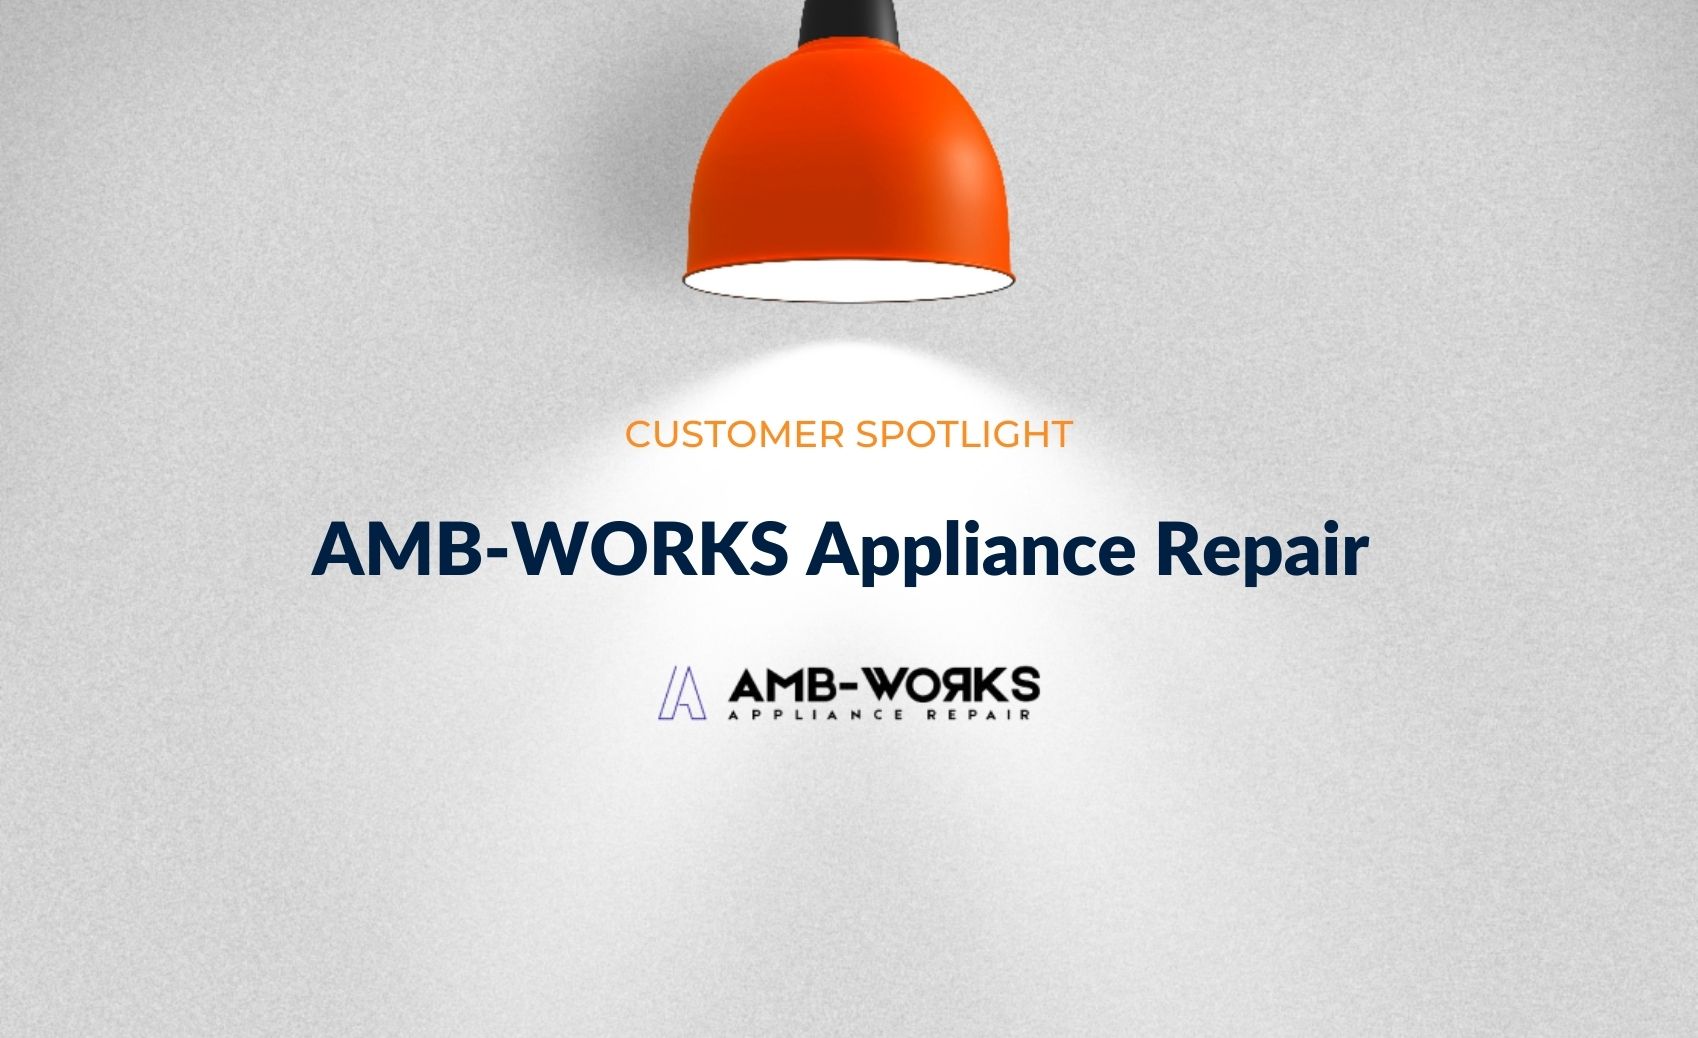 Customer Spotlight: AMB-WORKS Appliance Repair